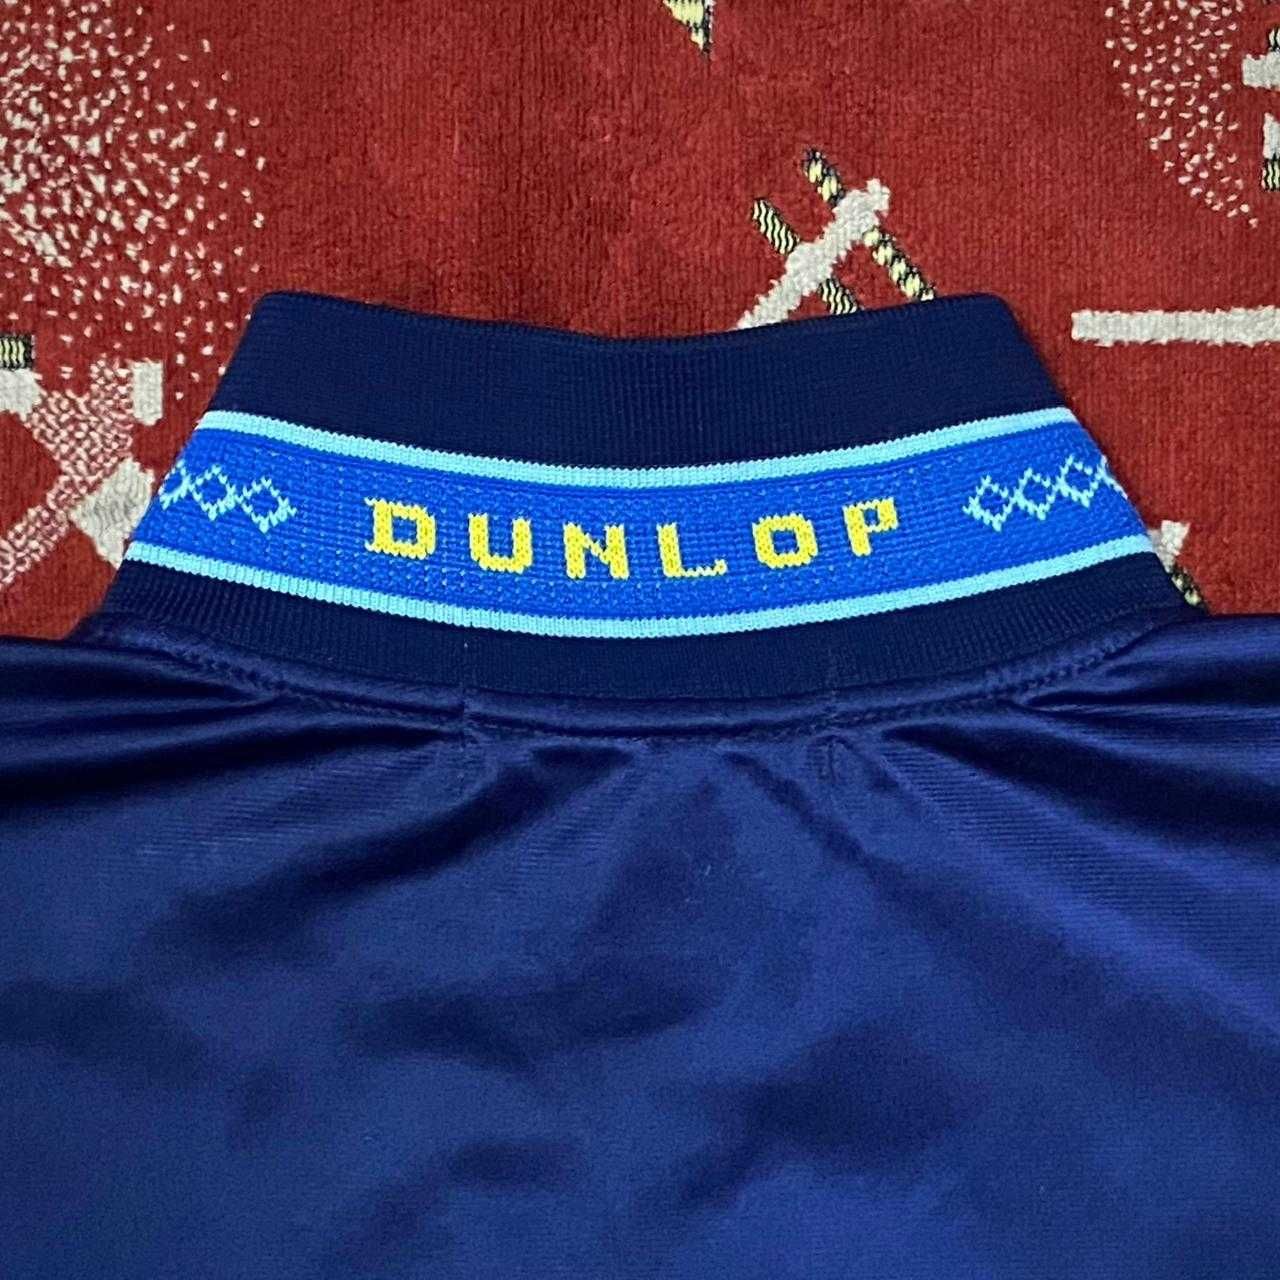 Винтажная спортивка "Dunlop" Sport оригинал на 50-52 разм. Unisex.